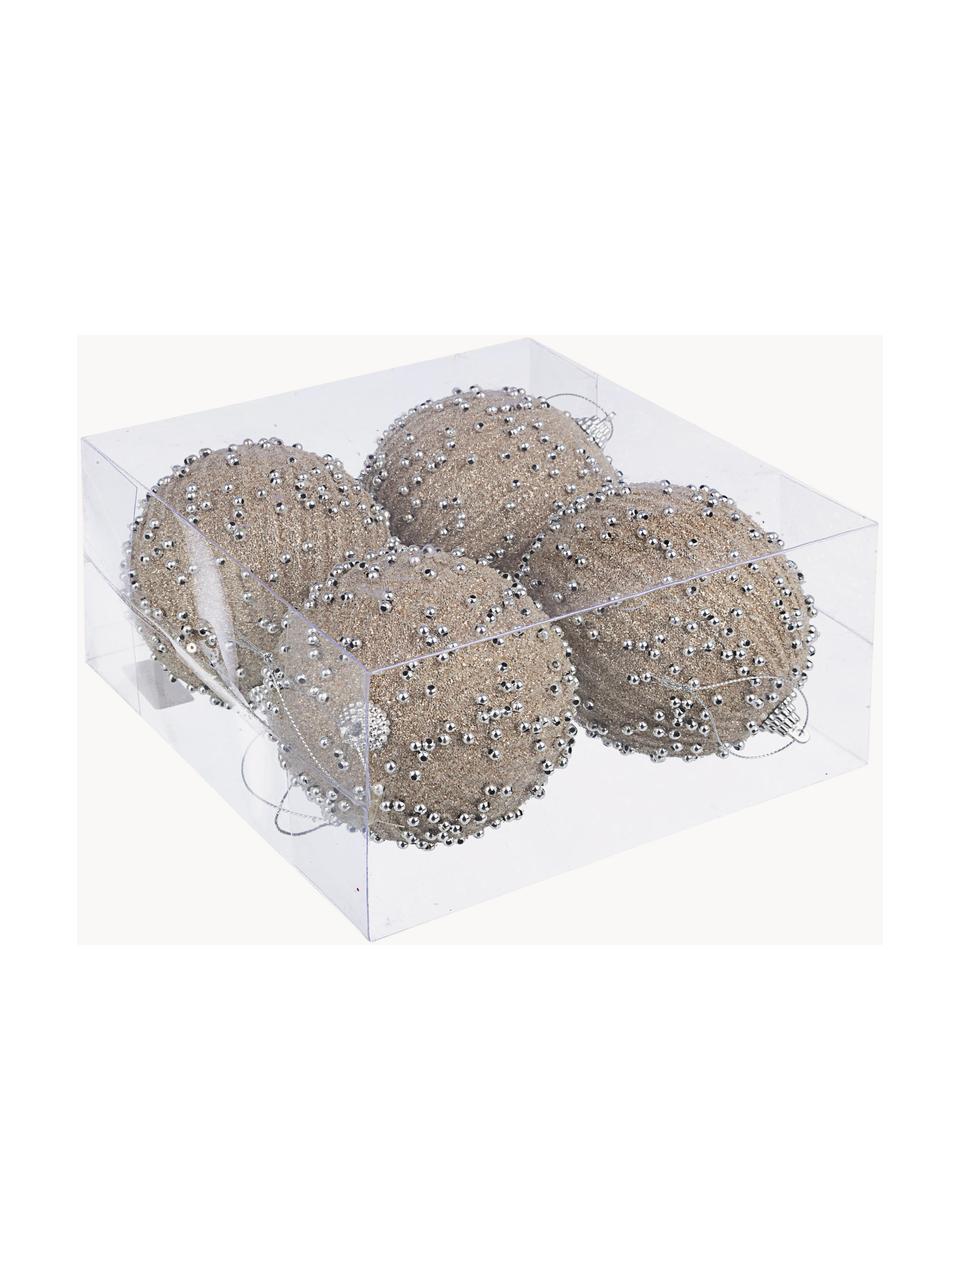 Kerstballen Pearly, 4 stuks, Polyschuim, Lichtbeige, glanzend, zilverkleurig, Ø 10 cm